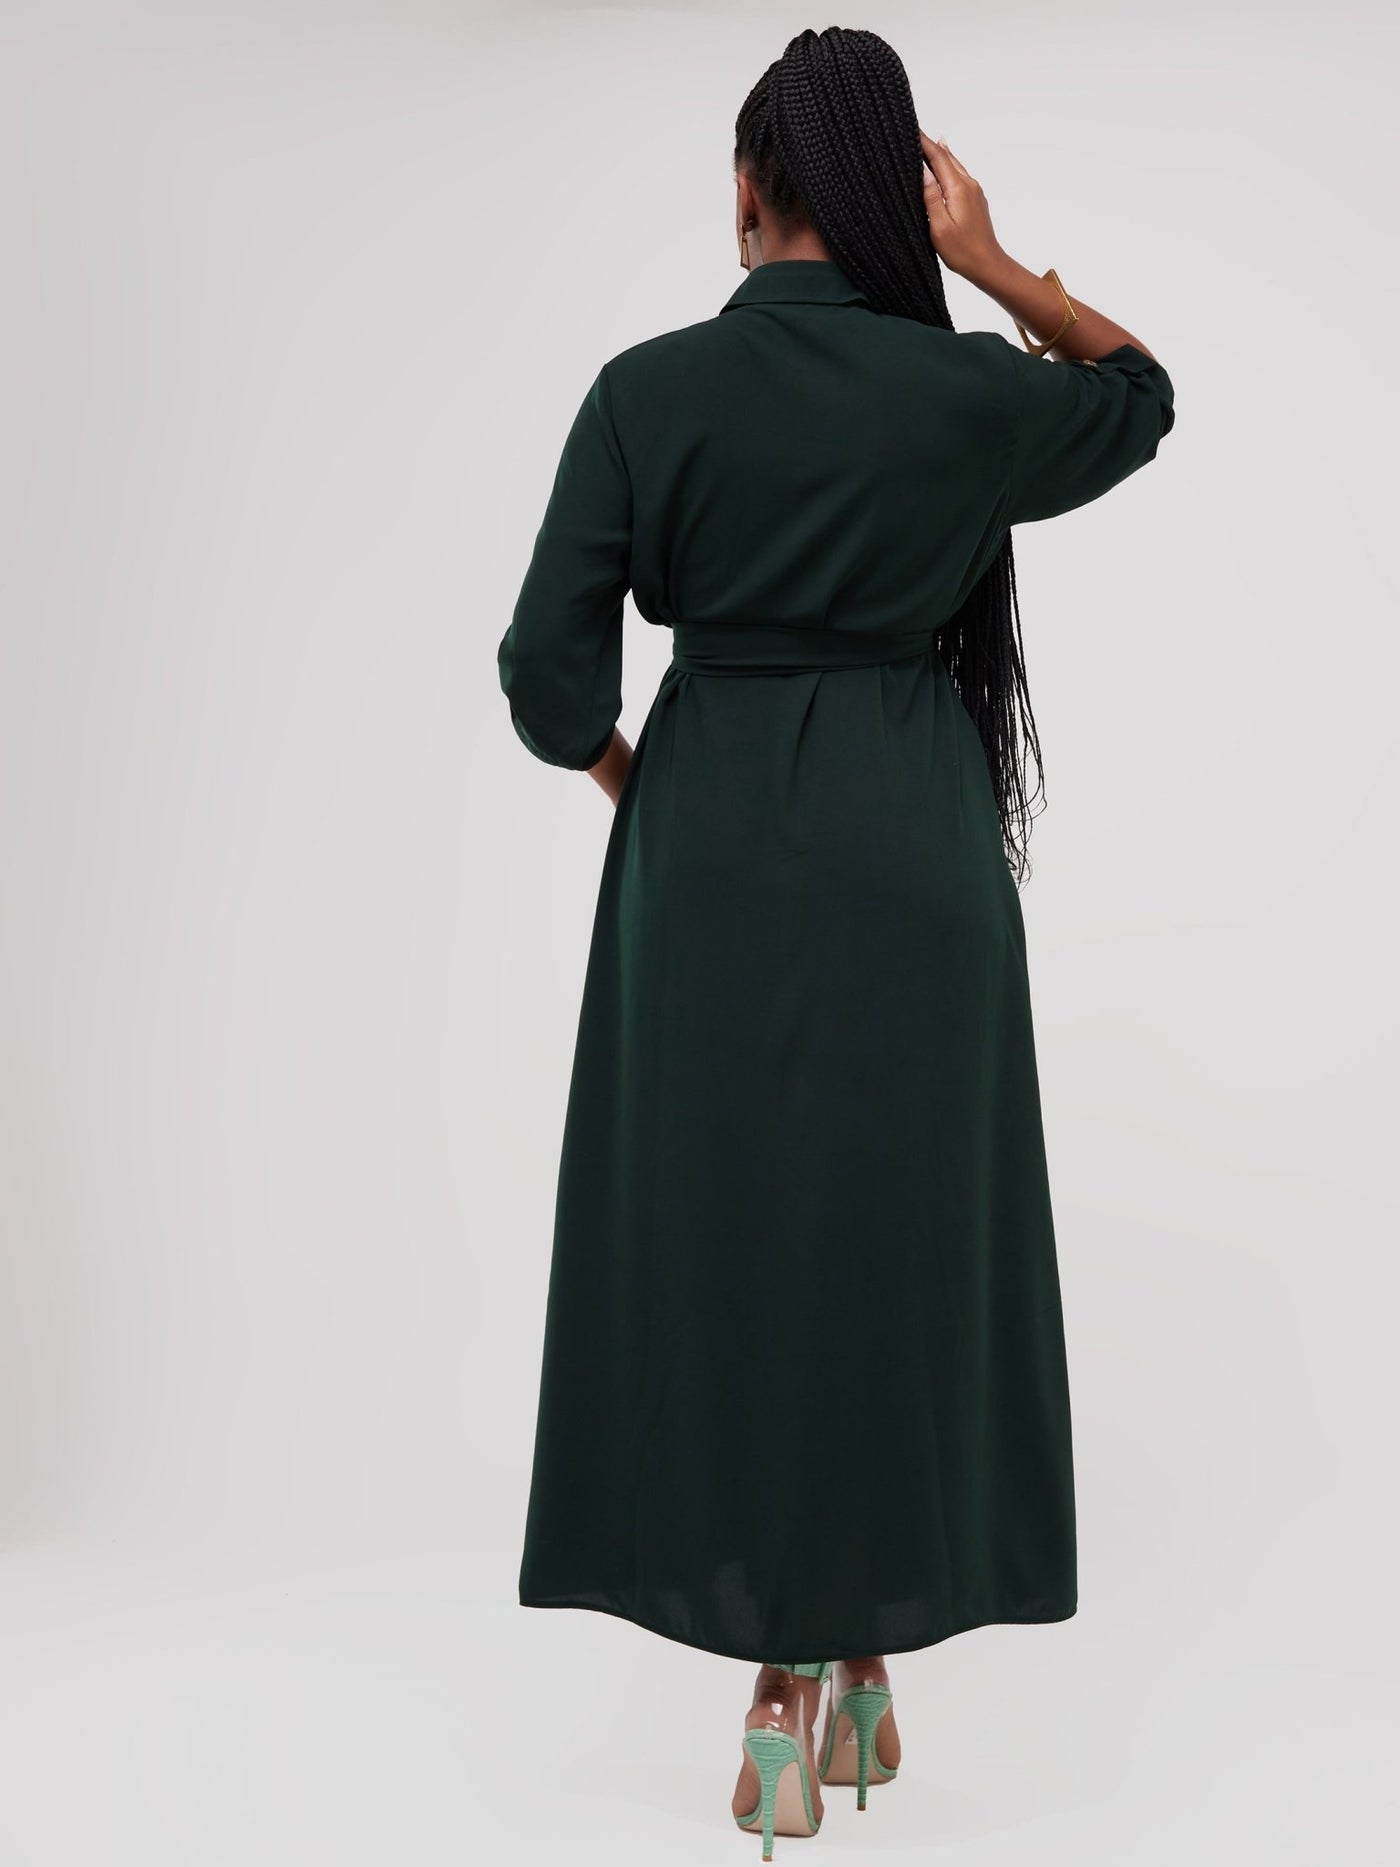 Salok Rave Shirt Dress - Dark Green - Shop Zetu Kenya